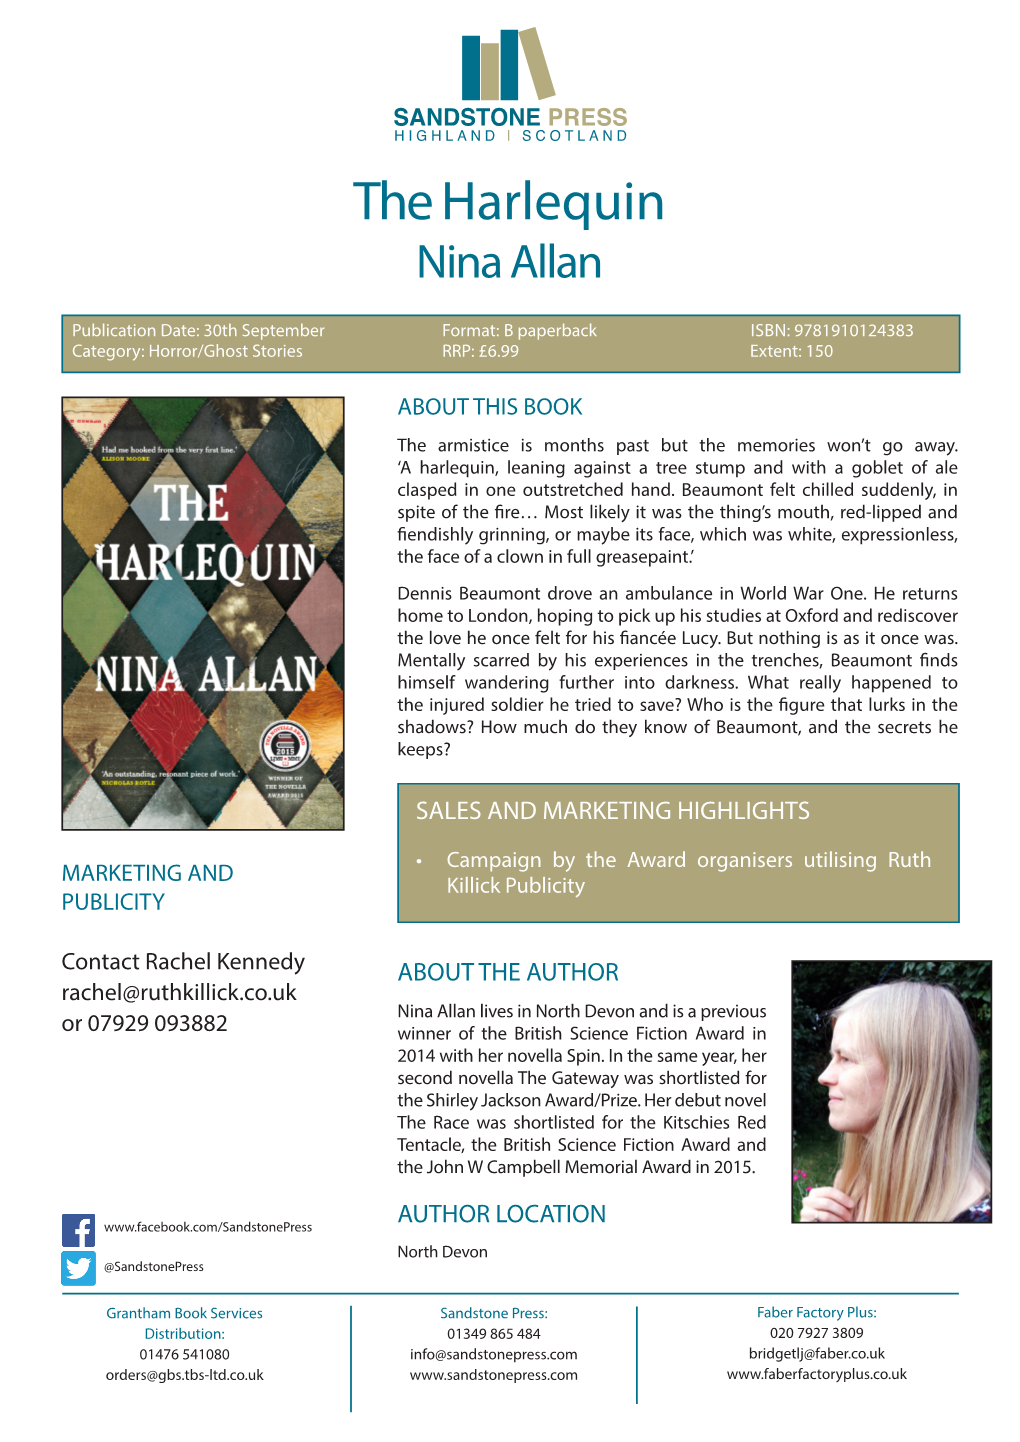 The Harlequin Nina Allan